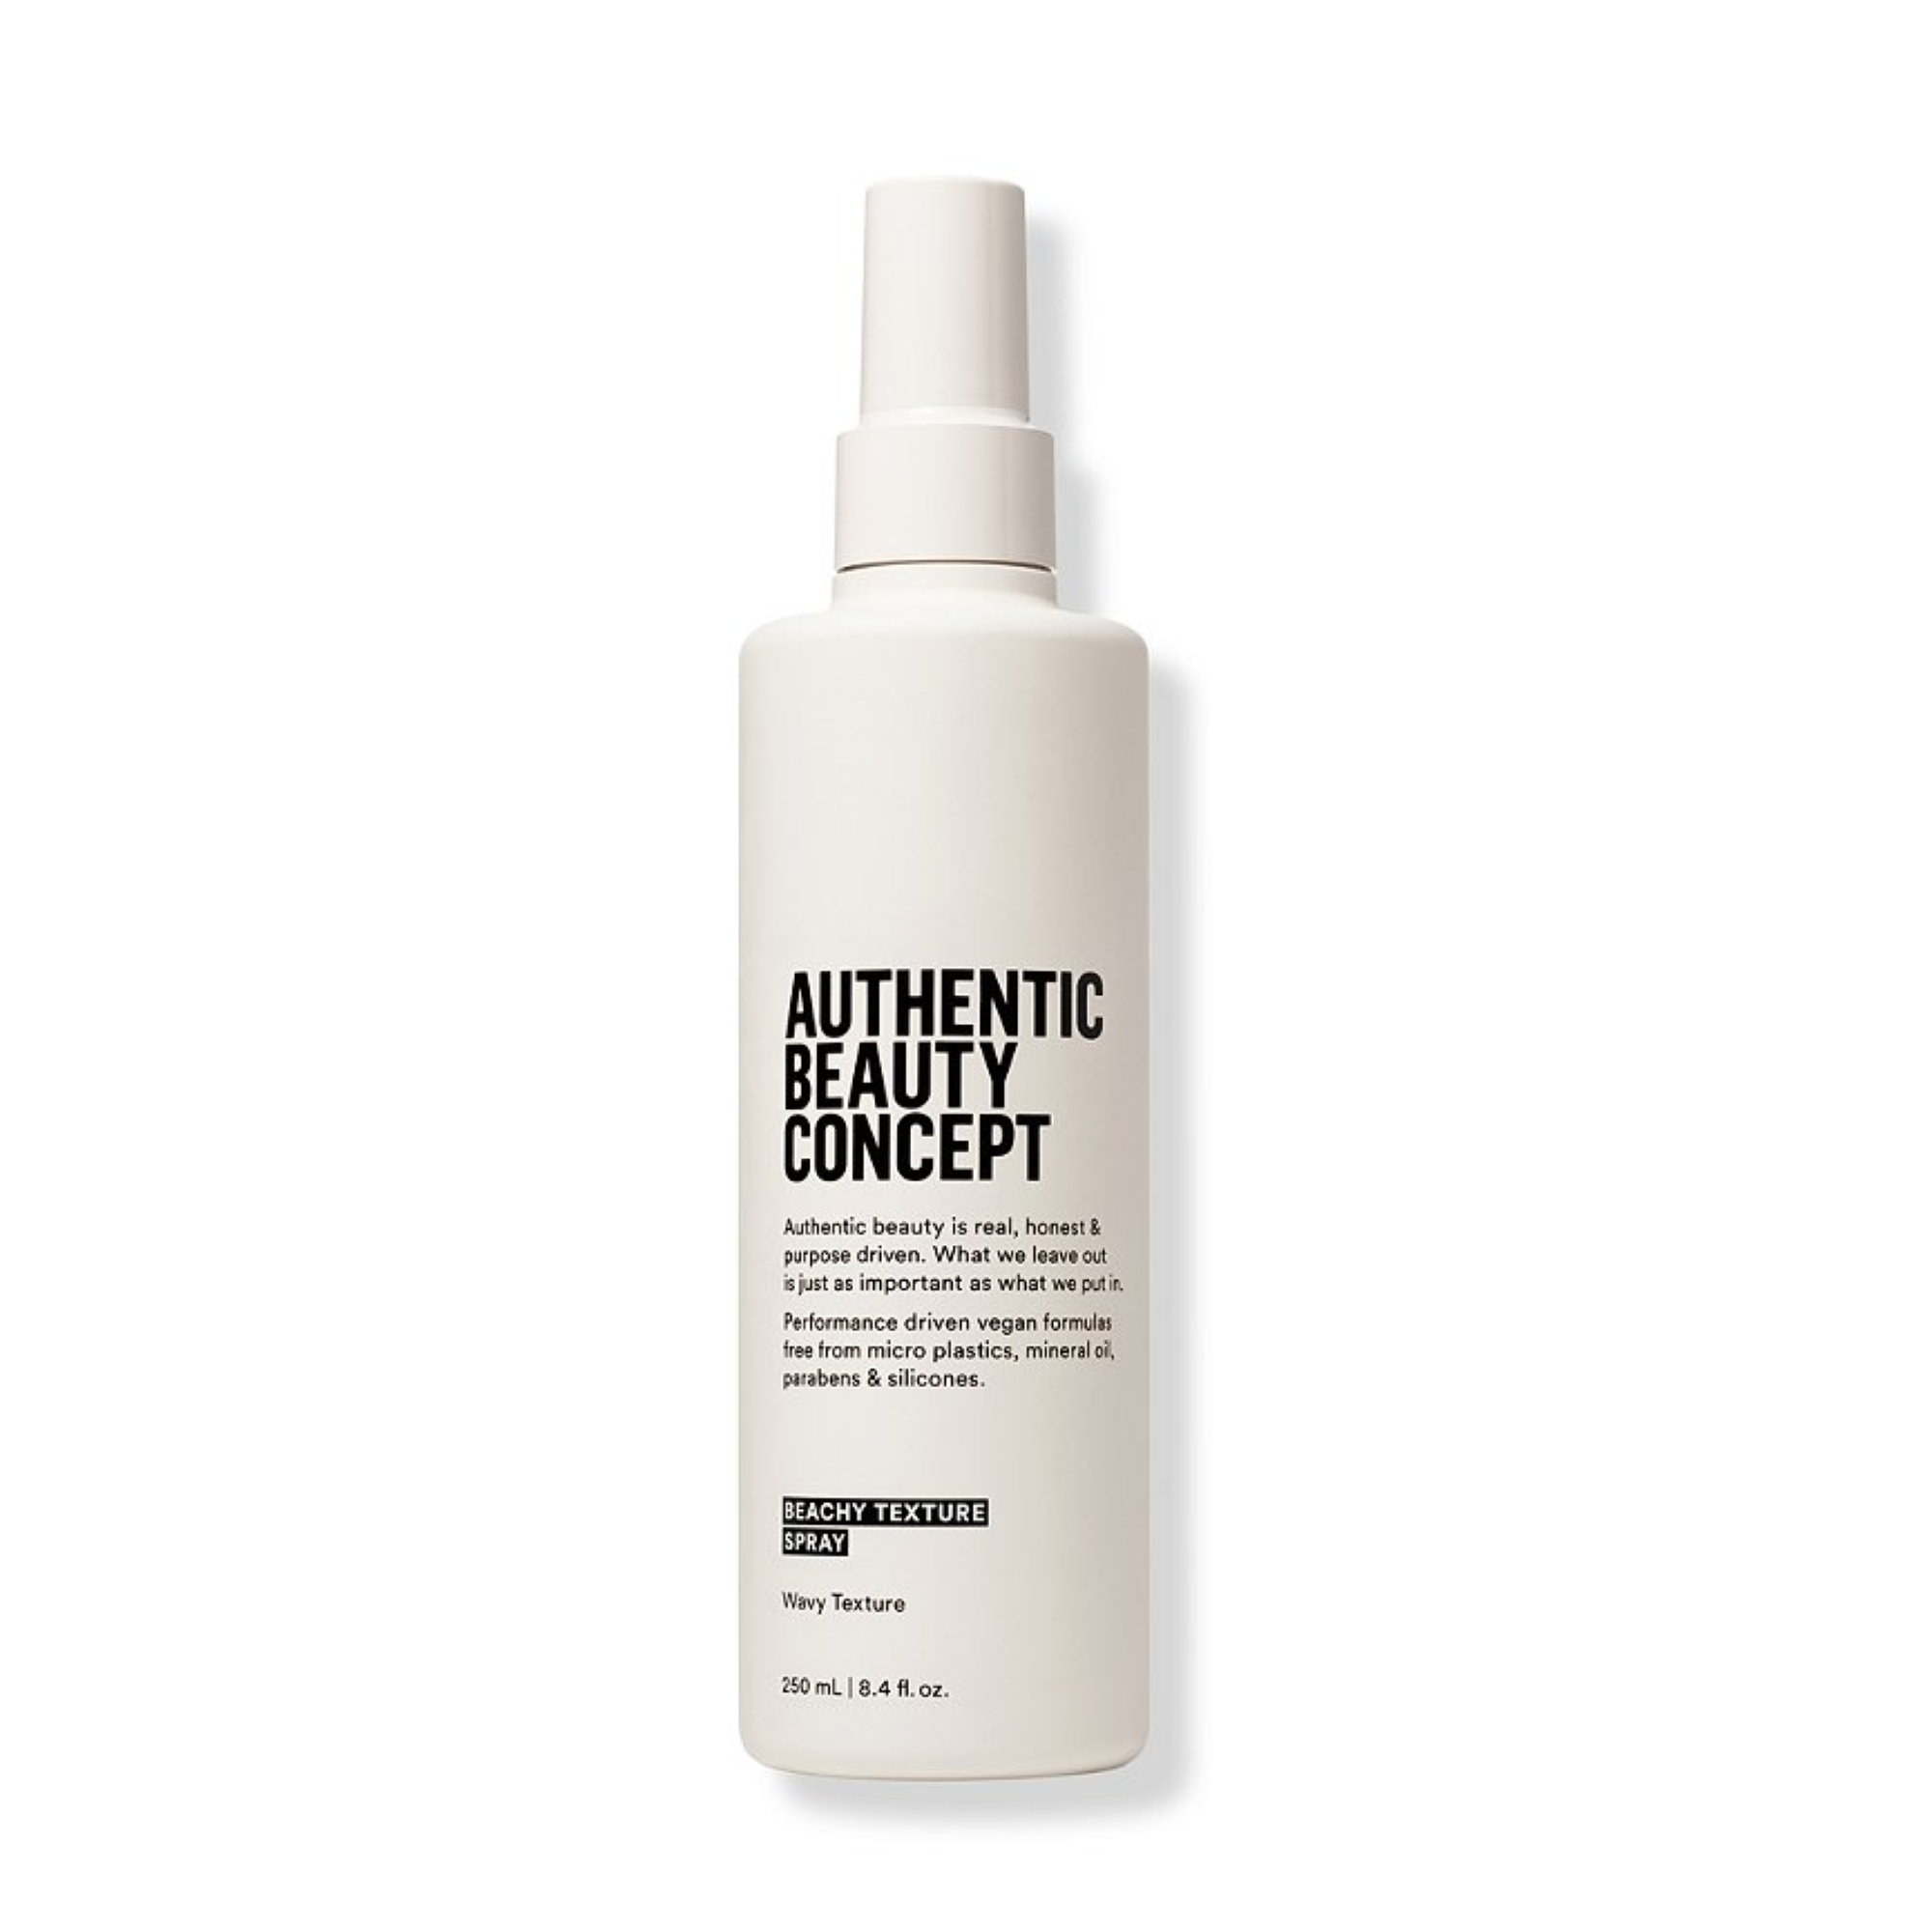 Authentic Beauty Concept Beachy Texture Spray, 8.4 fl oz